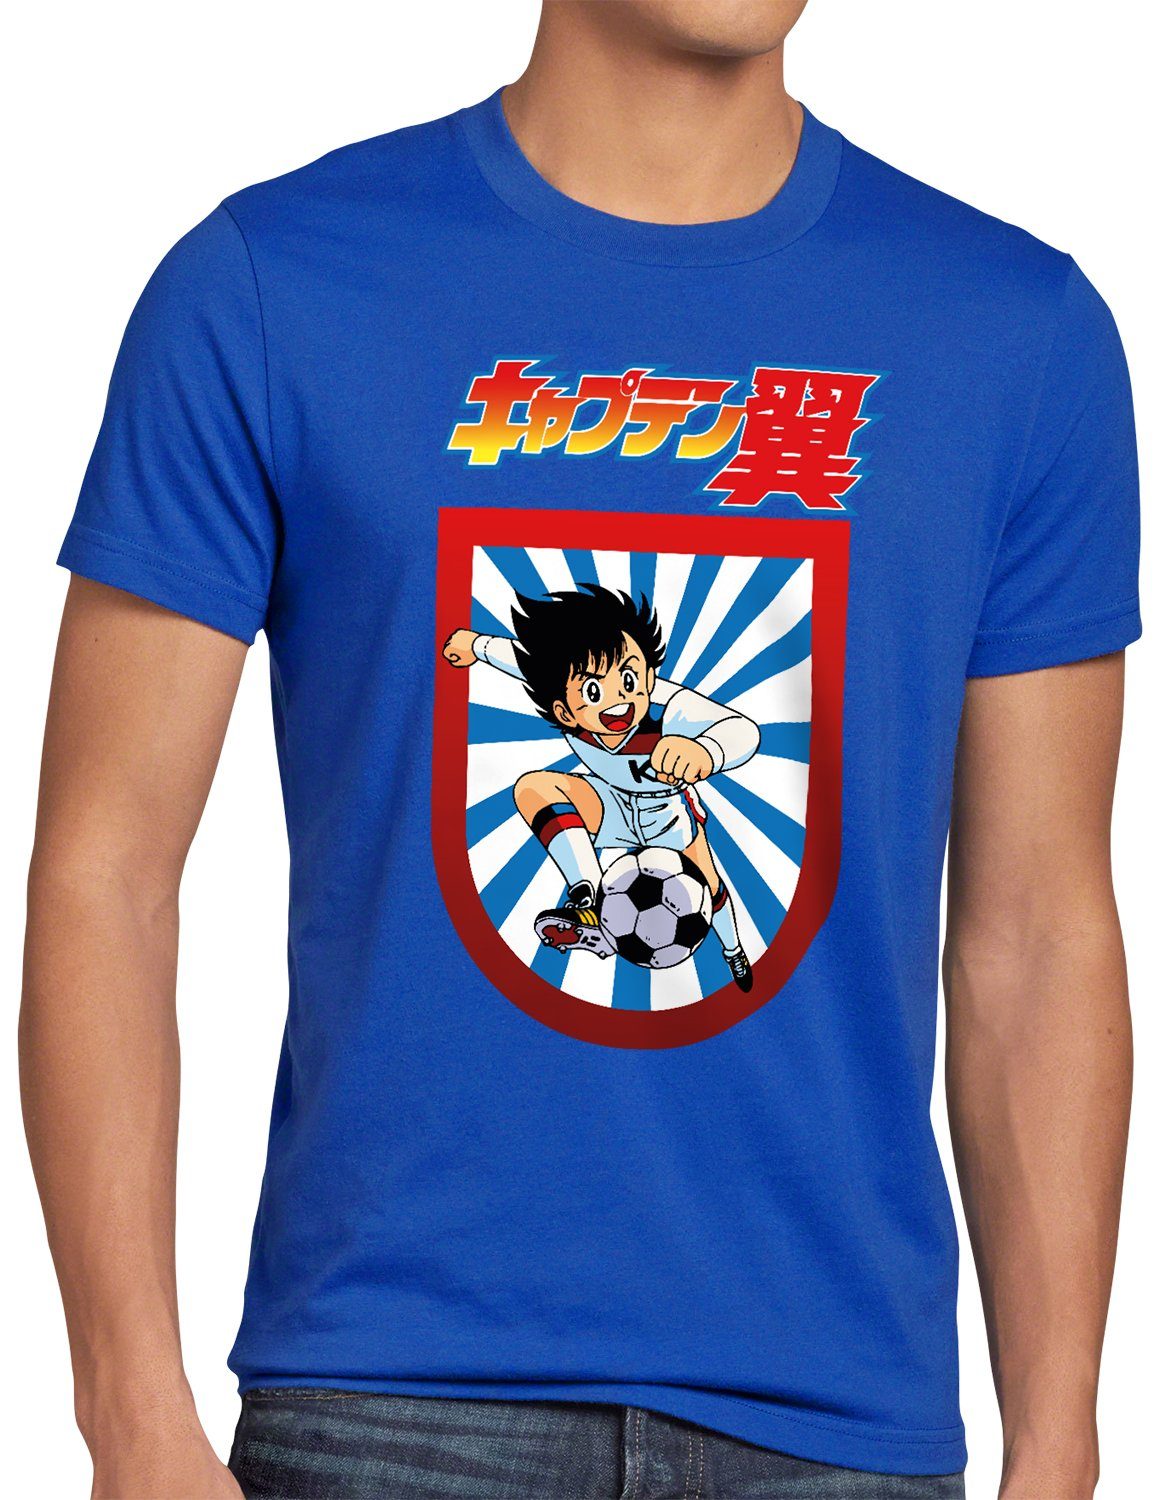 wm Herren blau Tsubasa tollen T-Shirt em Print-Shirt style3 fußballstars